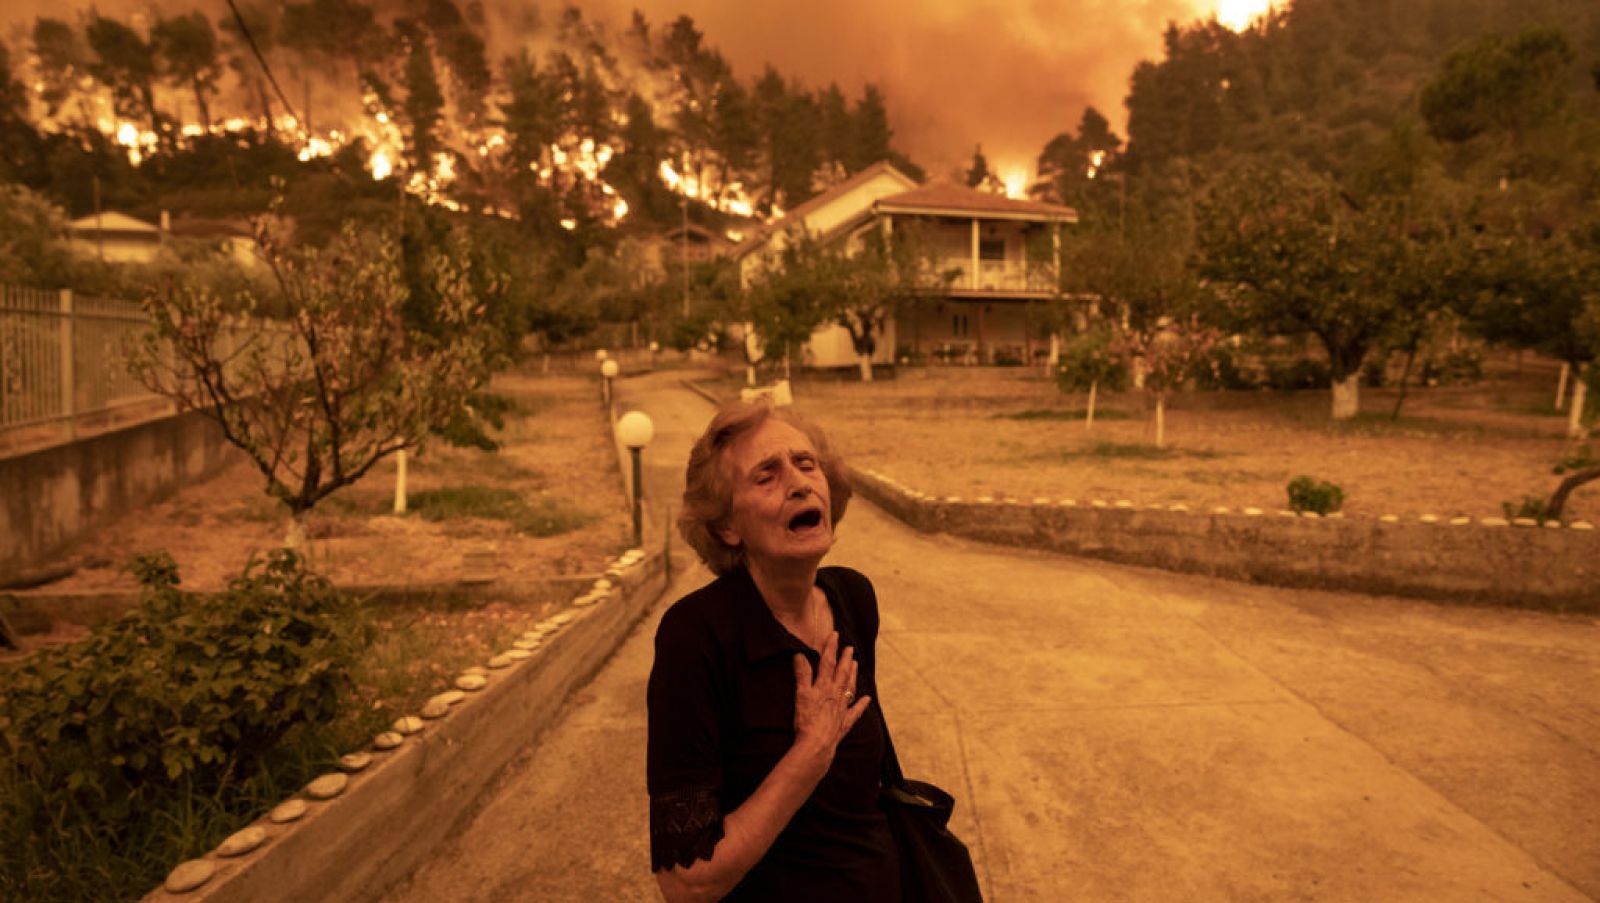 Evia Island Wildfire
Konstantinos Tsakalidis, Greece, For Bloomberg News